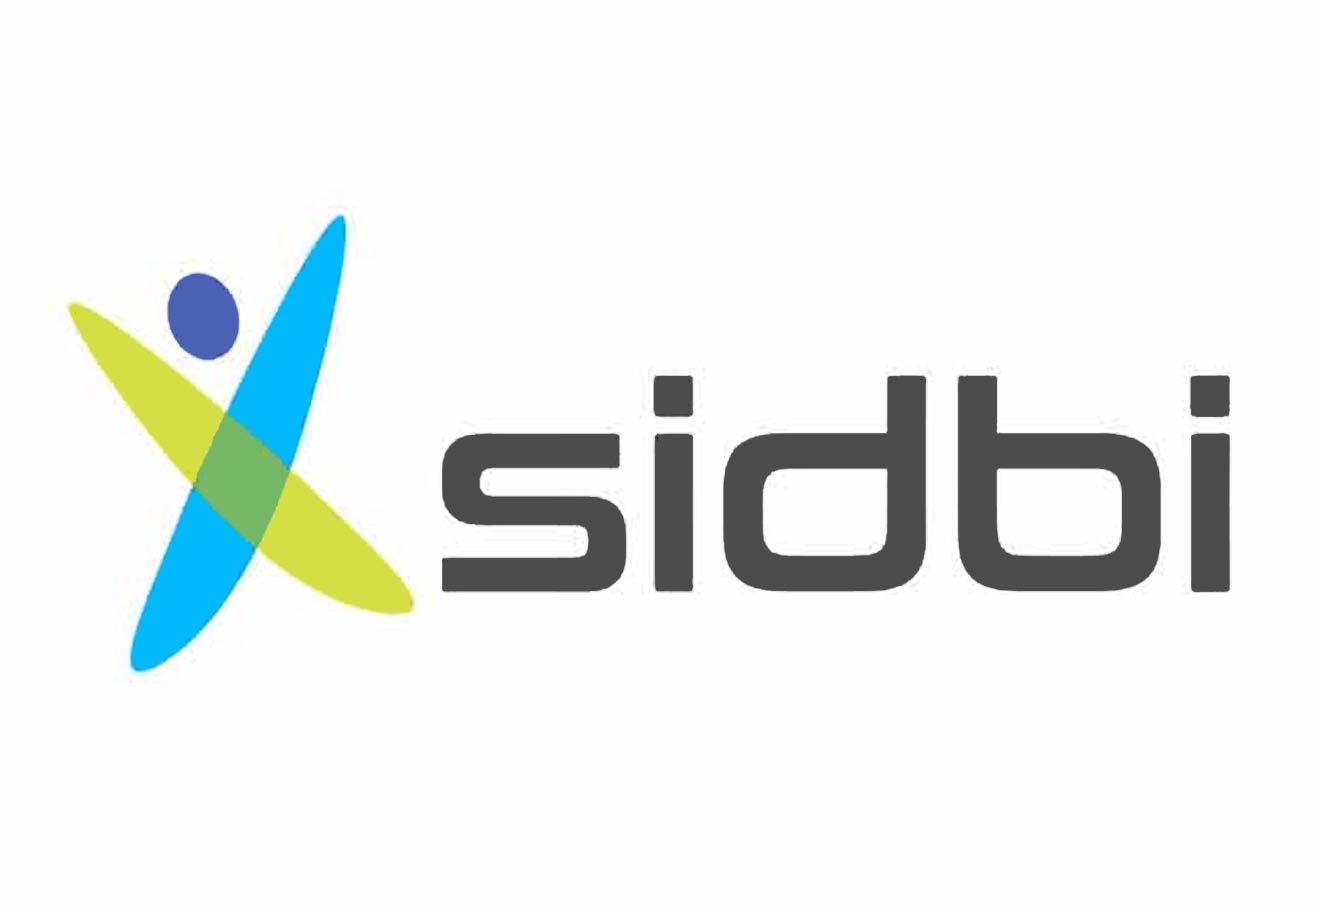 SIDBI Aims To Increase Stake In Total MSME Lending To 25%